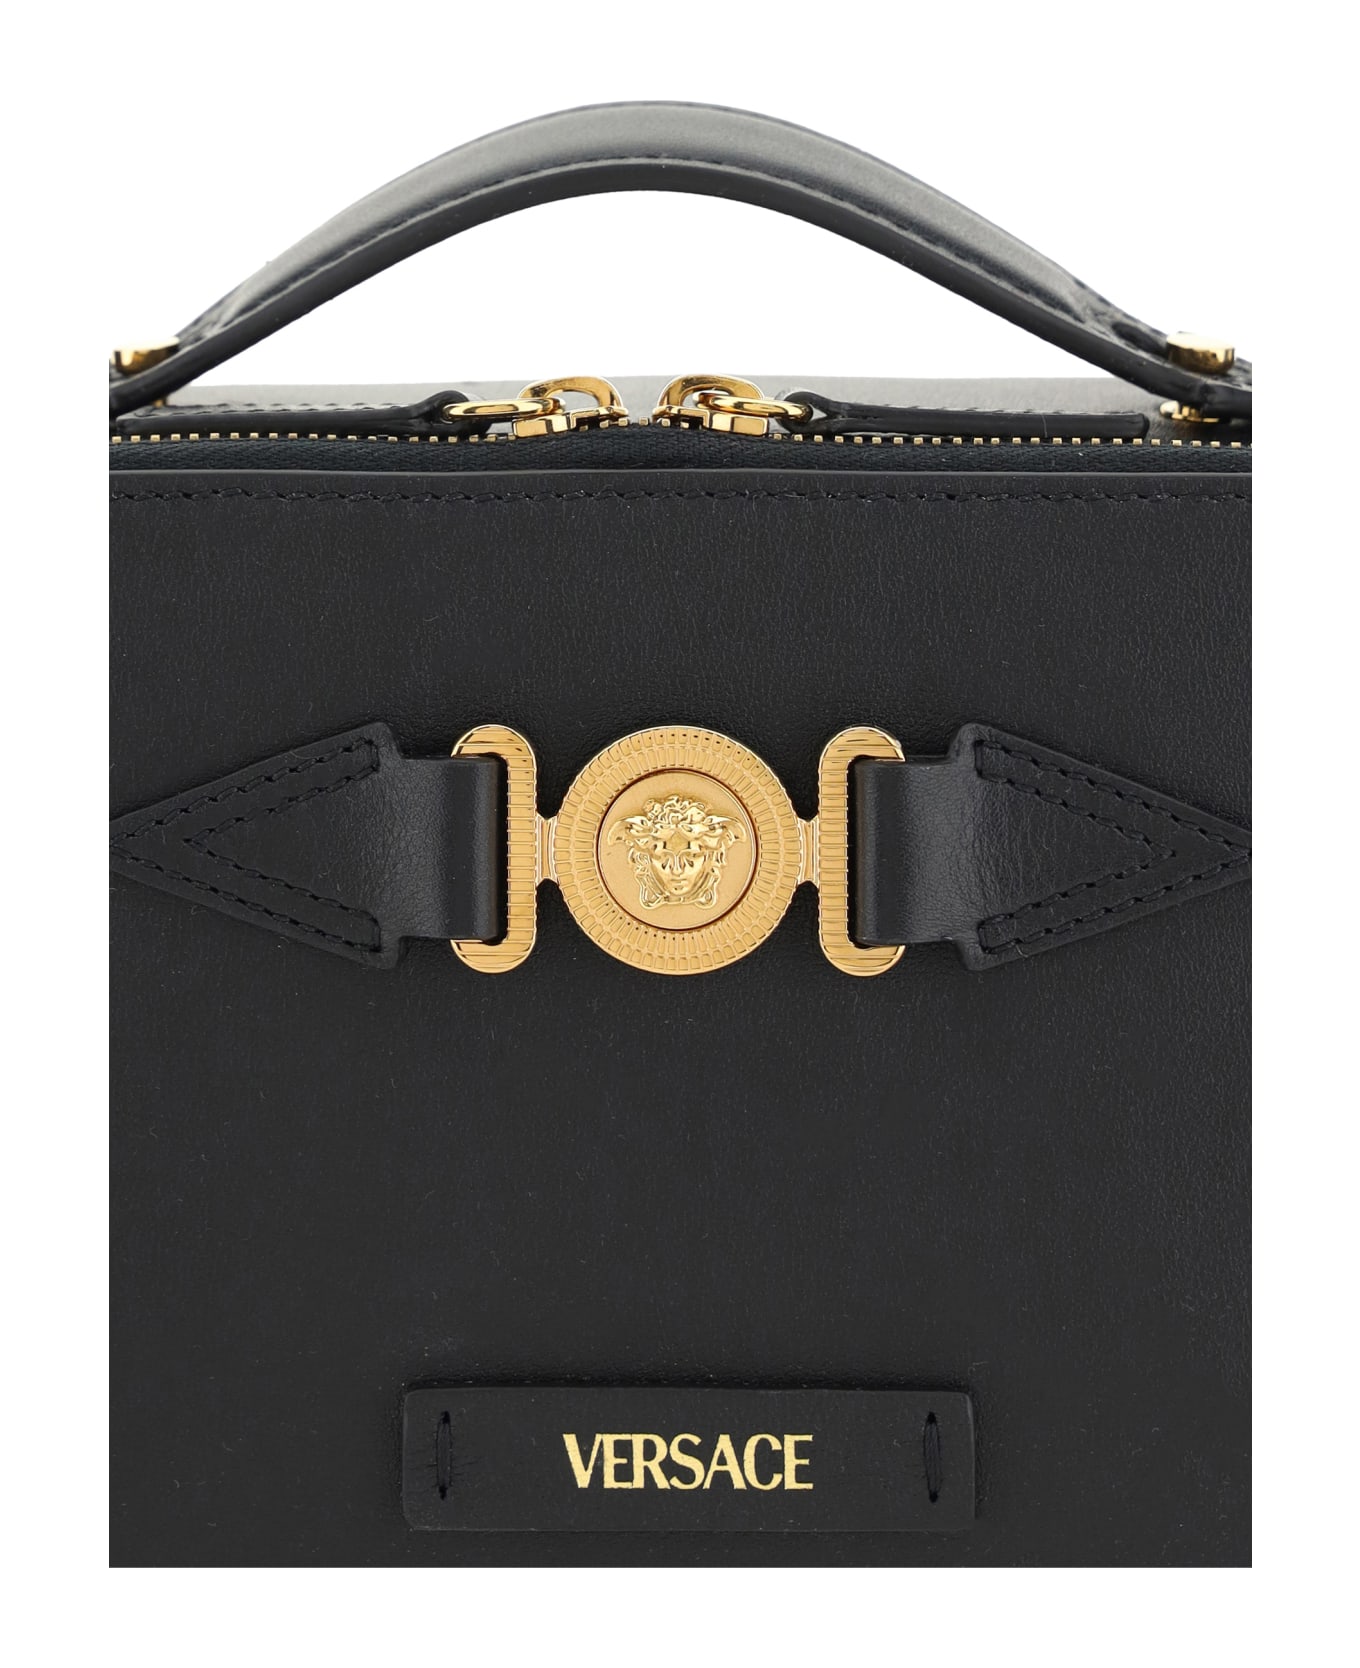 Versace Medusa Shoulder Bag - Black/versace Gold ショルダーバッグ